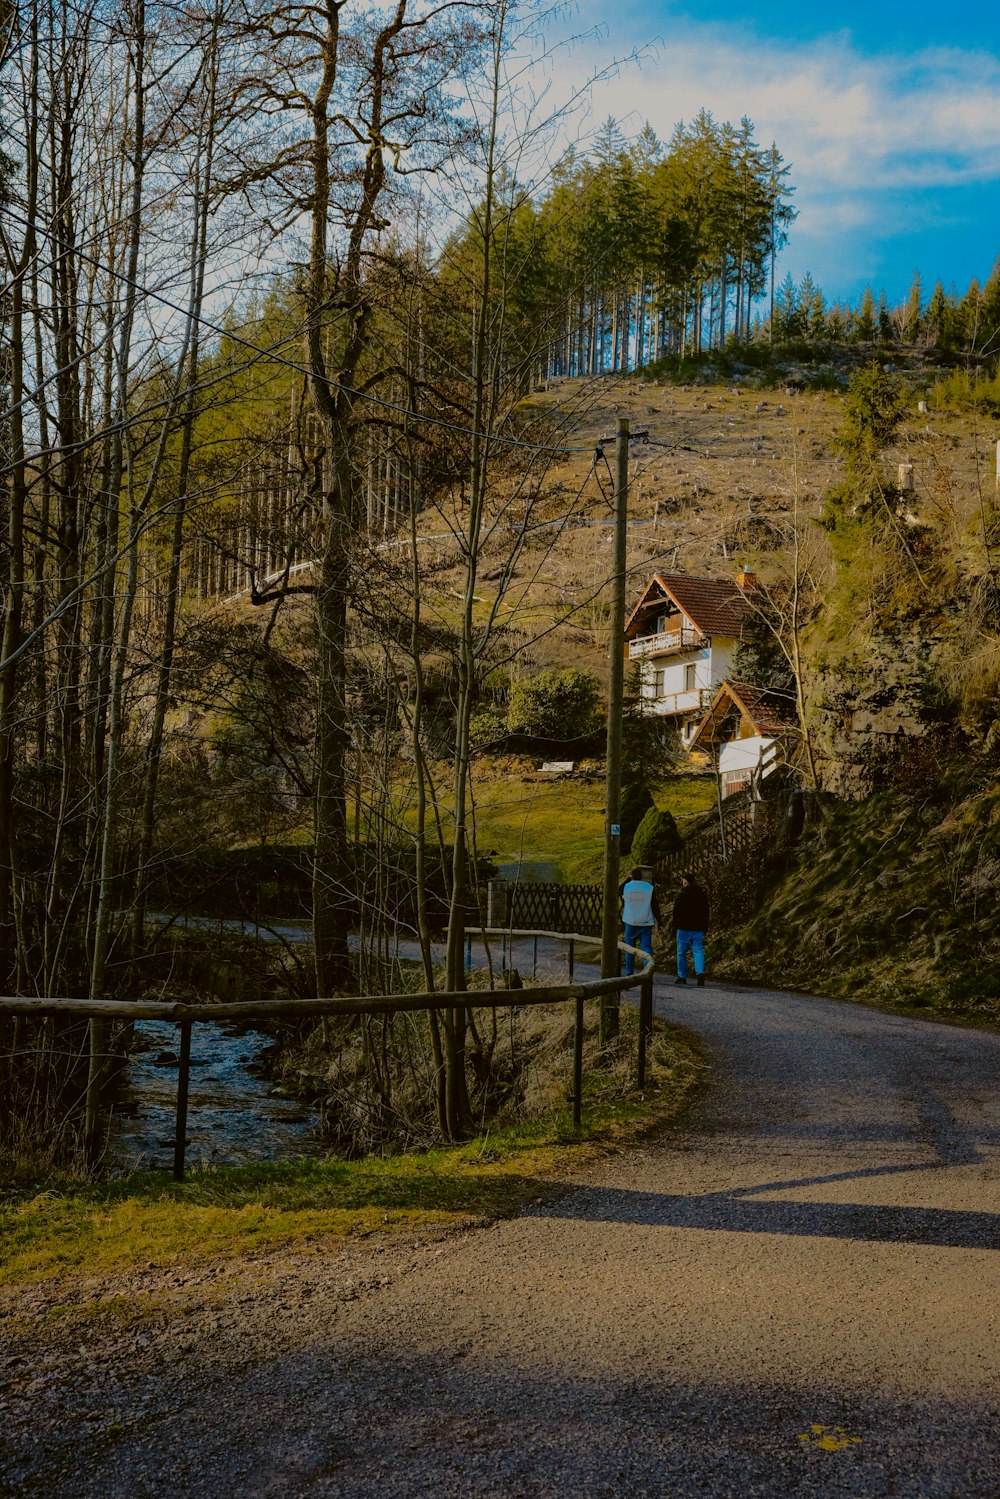 a person walking down a road next to a lush green hillside